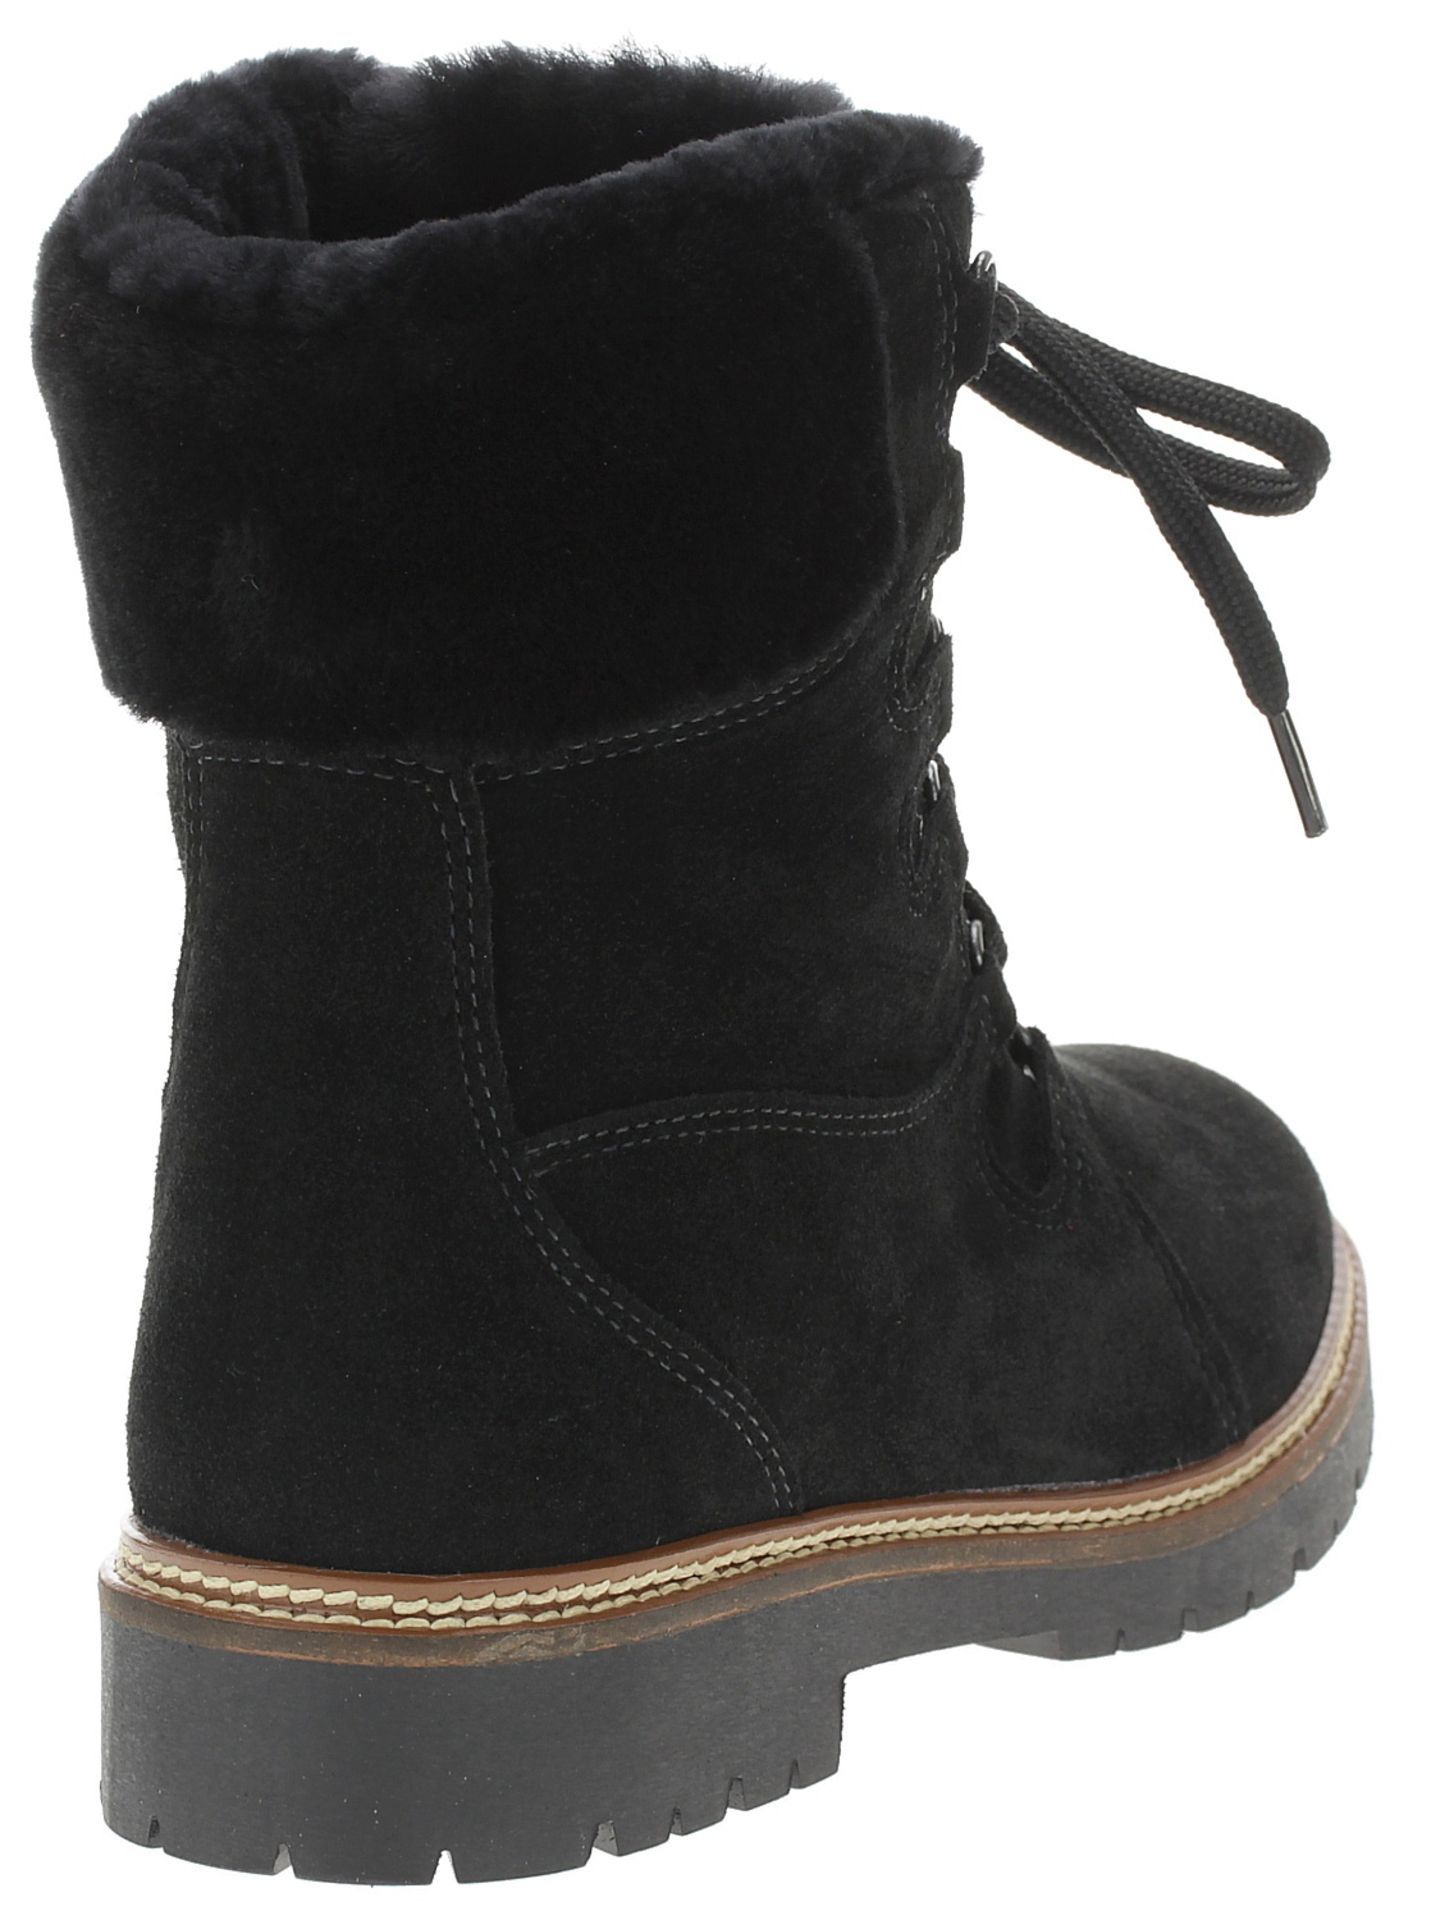 1 x Pair of Designer Olang Meribel 81 Nero Women's Winter Boots - Euro Size 39 - Brand New Boxed - Image 2 of 5